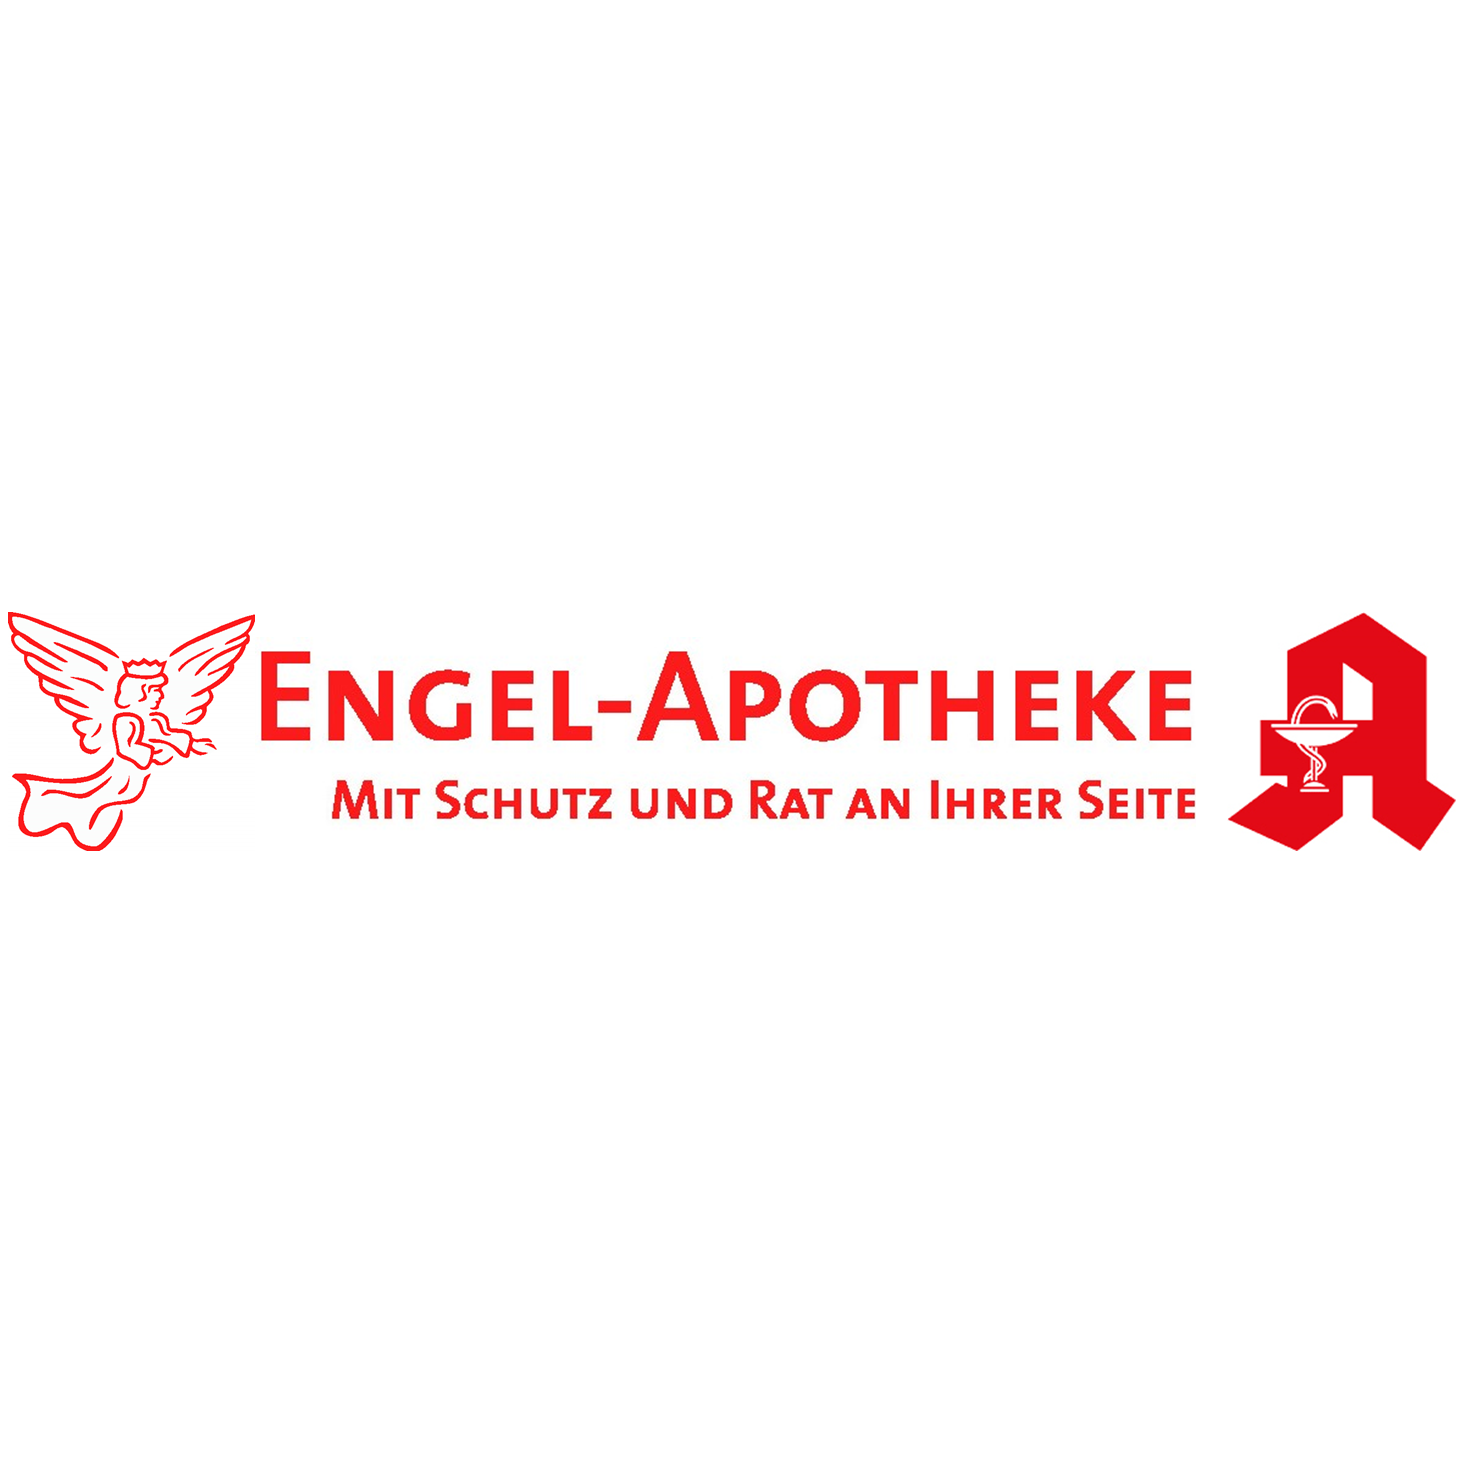 Engel-Apotheke Logo